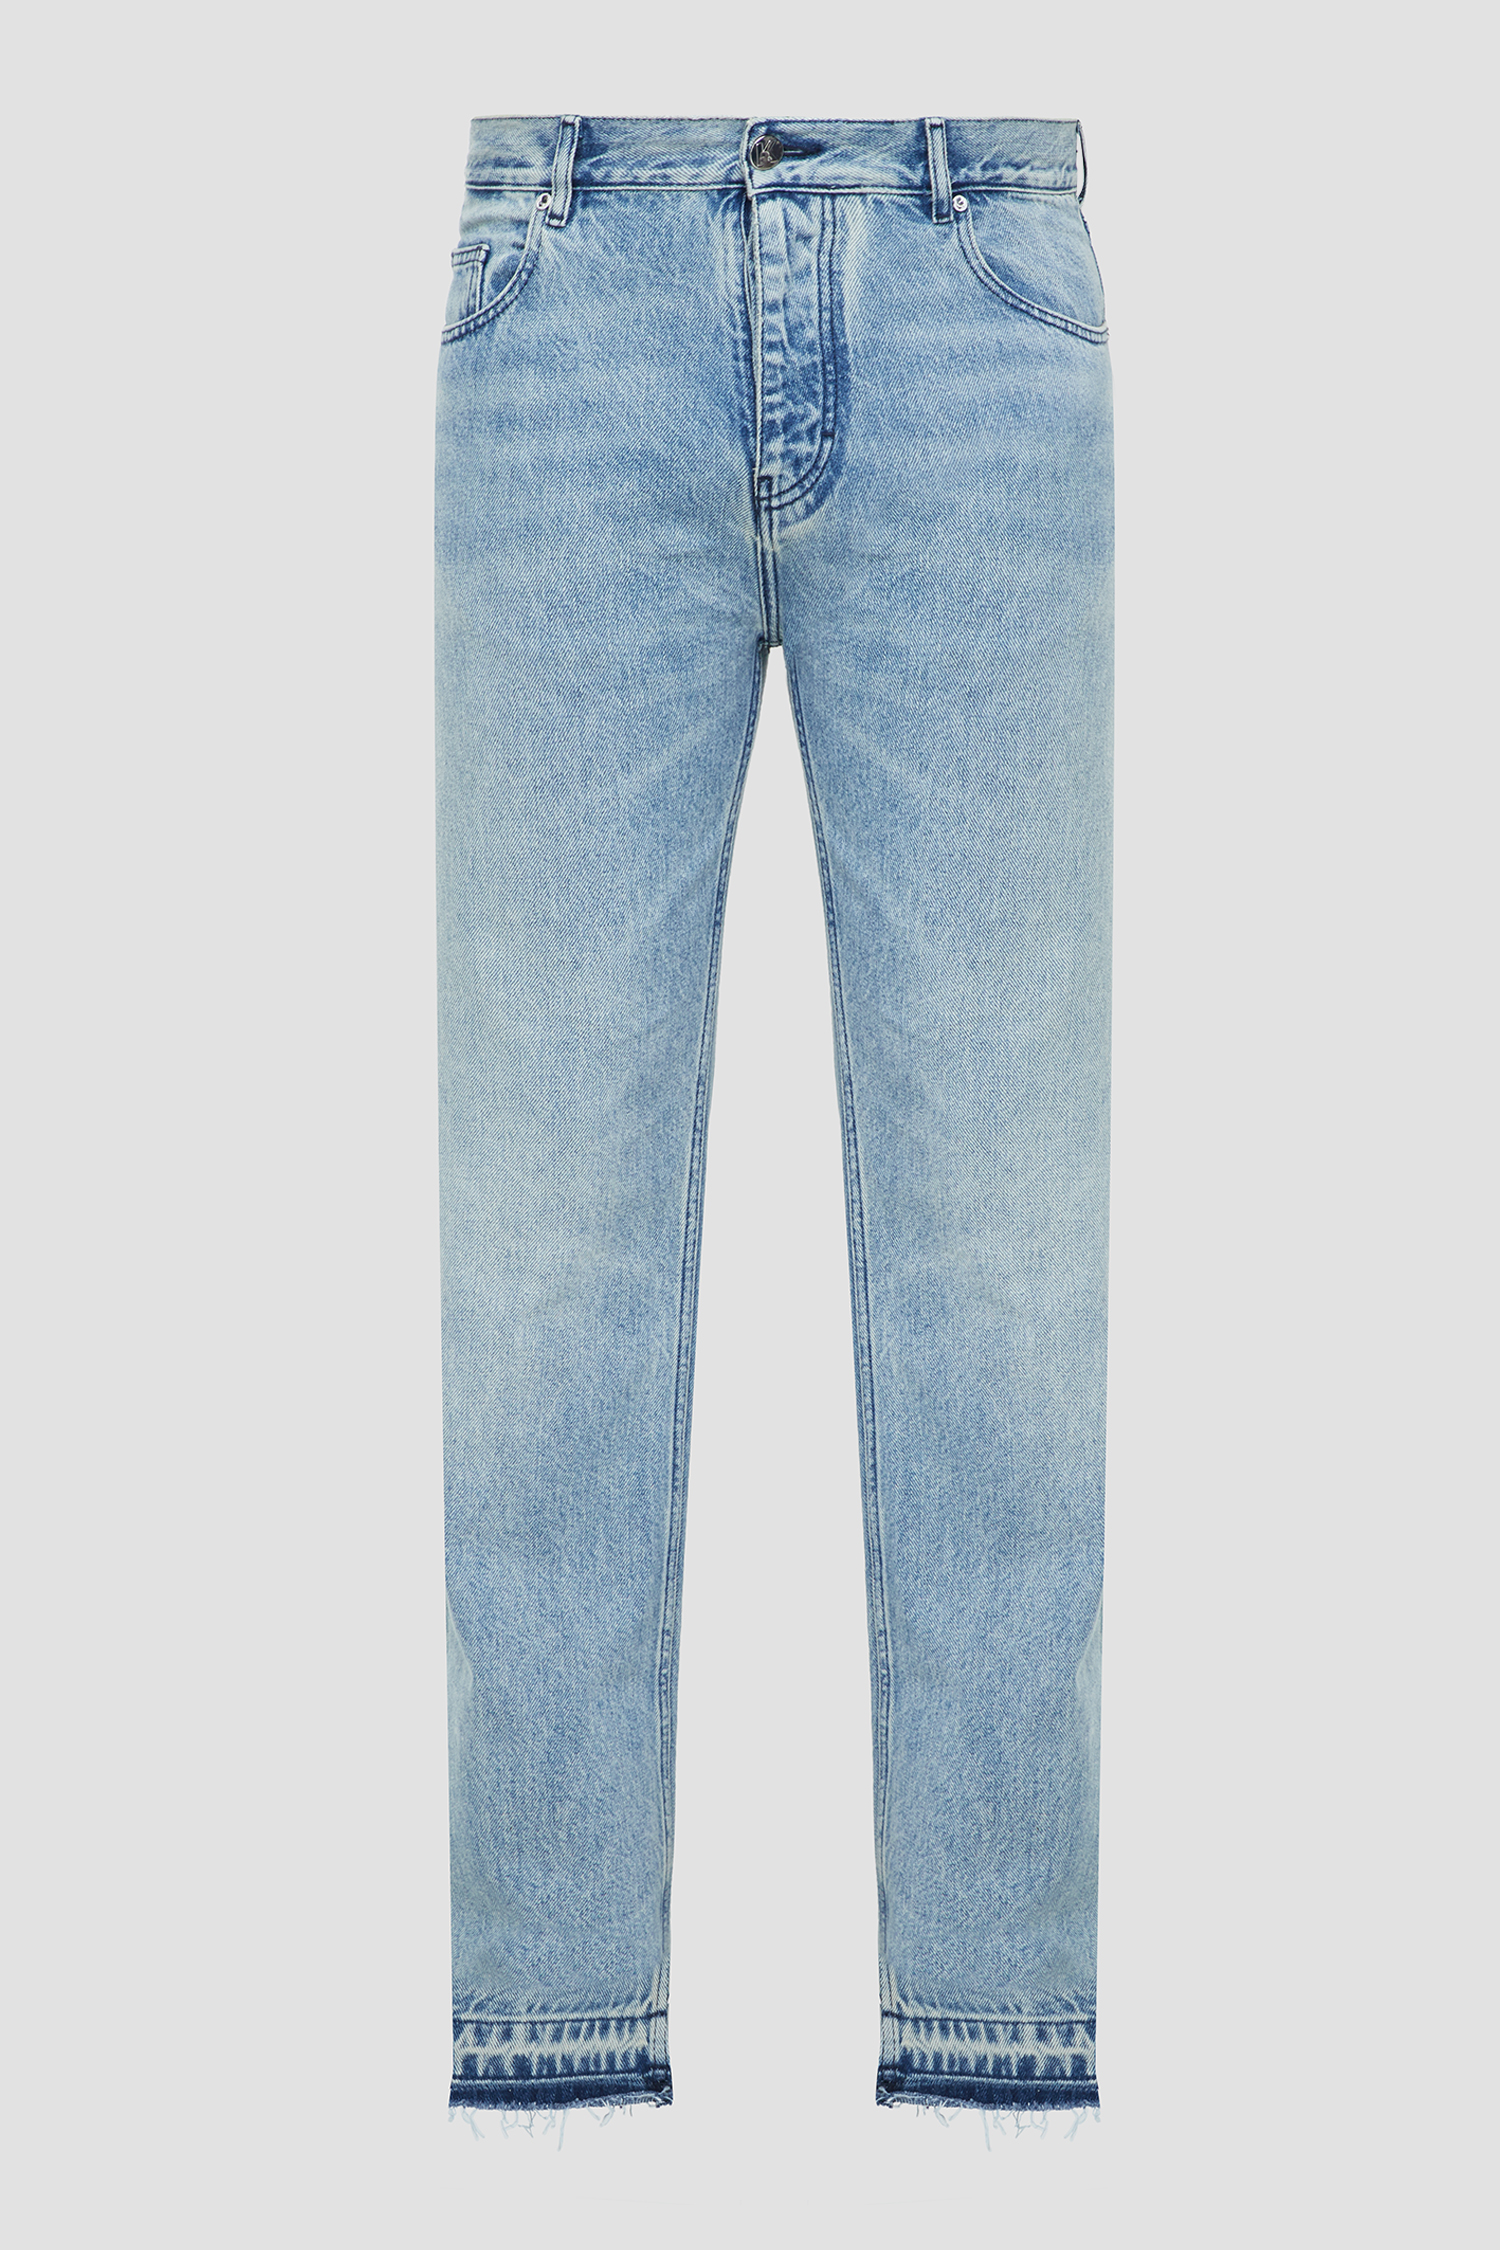 Мужские голубые джинсы Karl Lagerfeld 534865.265856;620